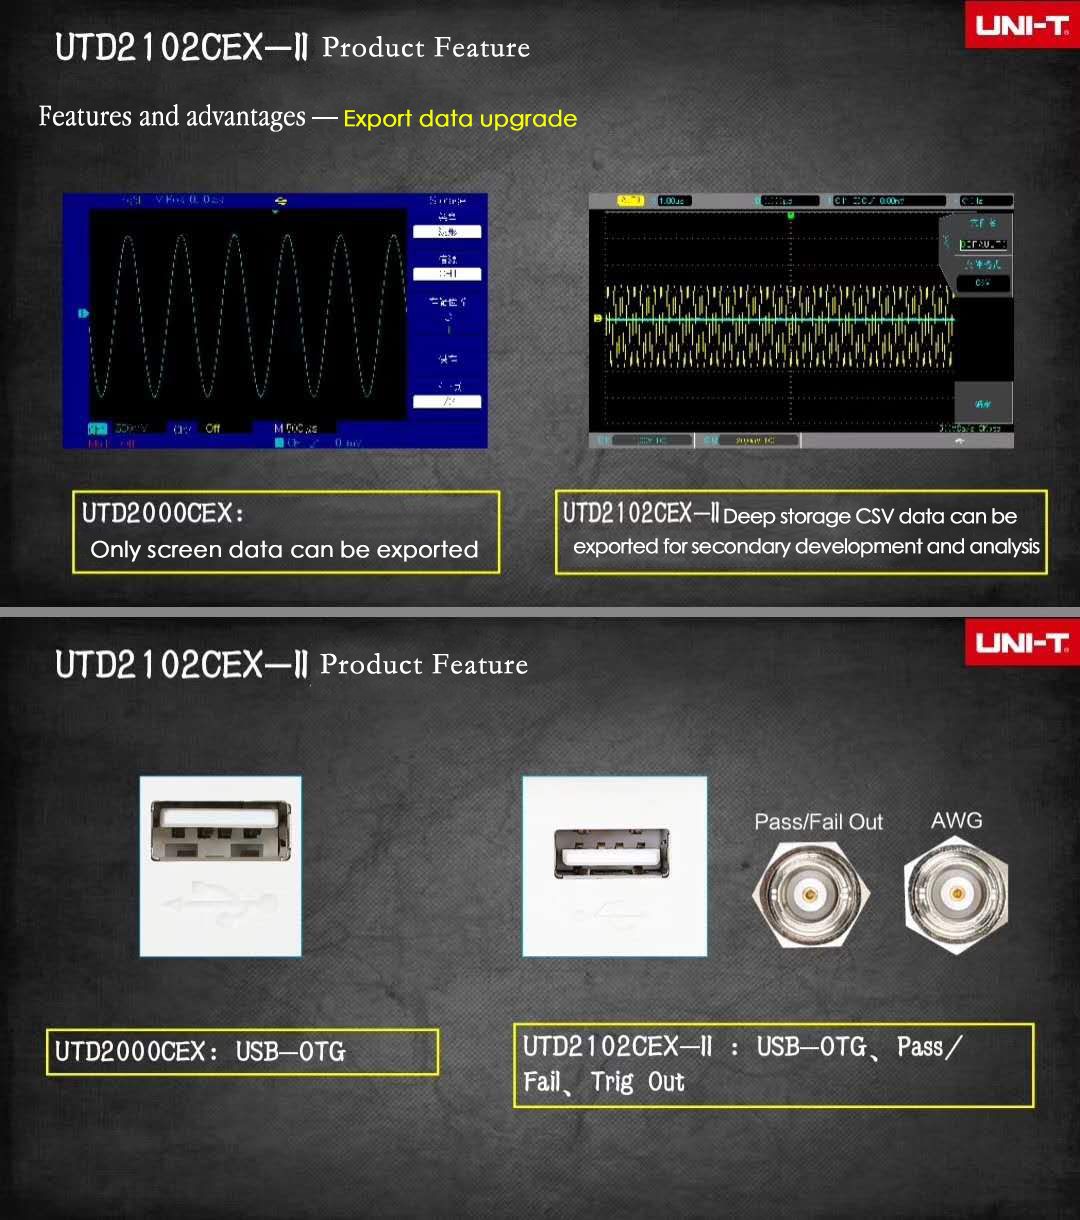 UNI-T-UTD2102CEX-II-Digital-Storage-Oscilloscope-2CH-100MHz-Bandwidth-800x480-WVGA-Phosphor-8Inch-TF-1361900